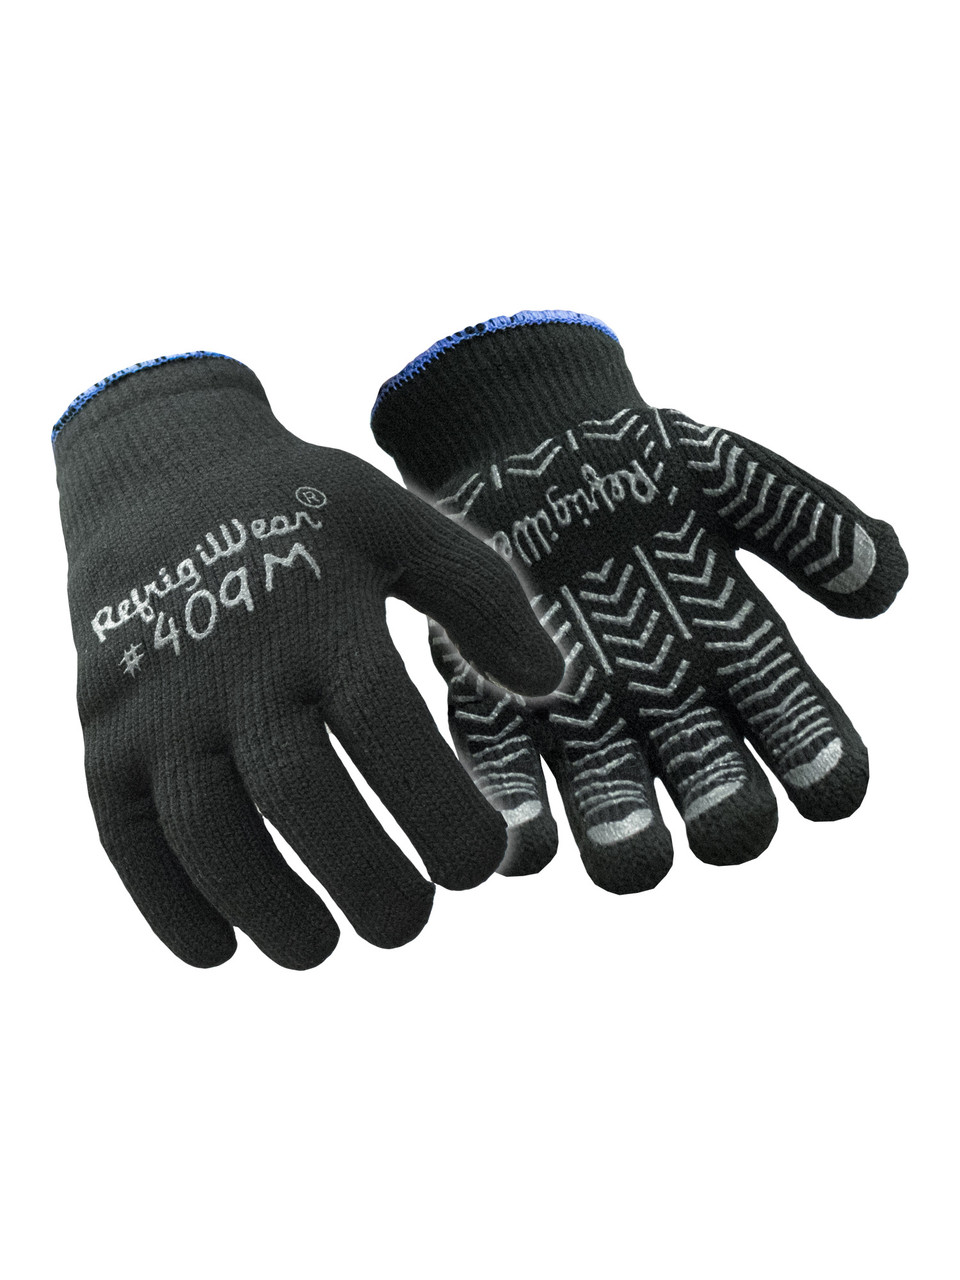 Refrigiwear Cold Protection Gloves, L, Black, PK12